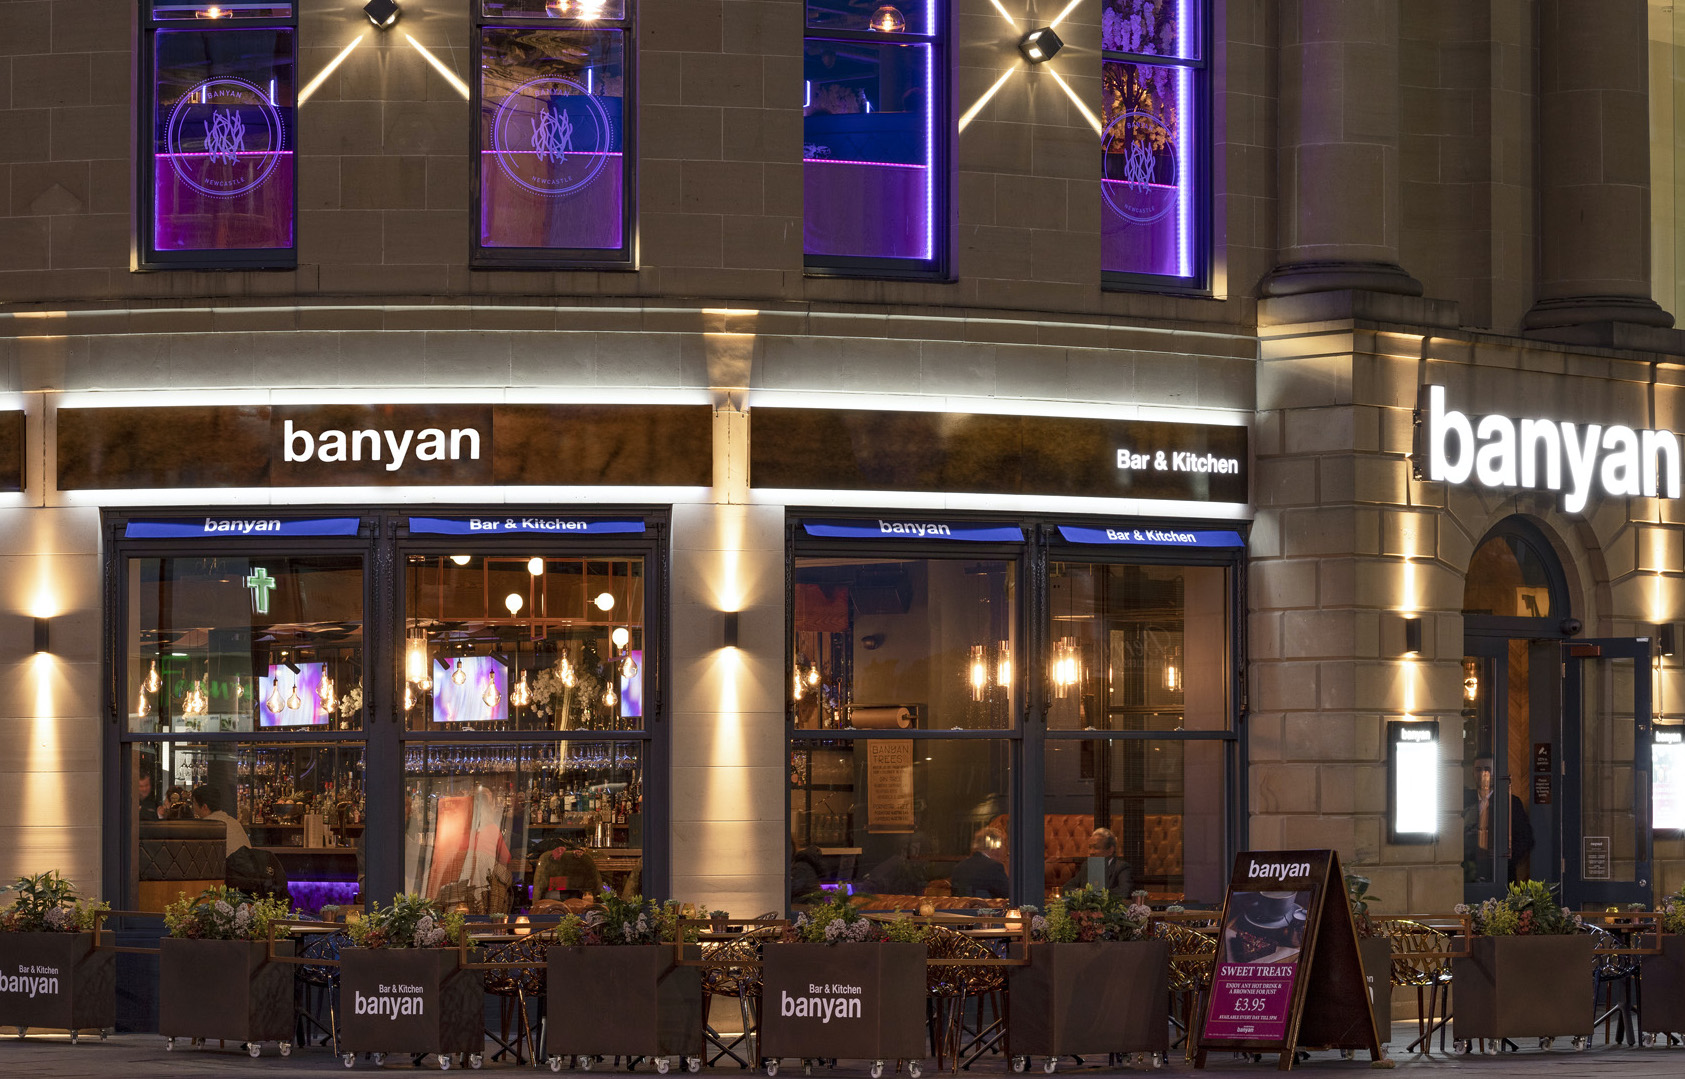 Banyan - Monument Mall on Thursday 4th January